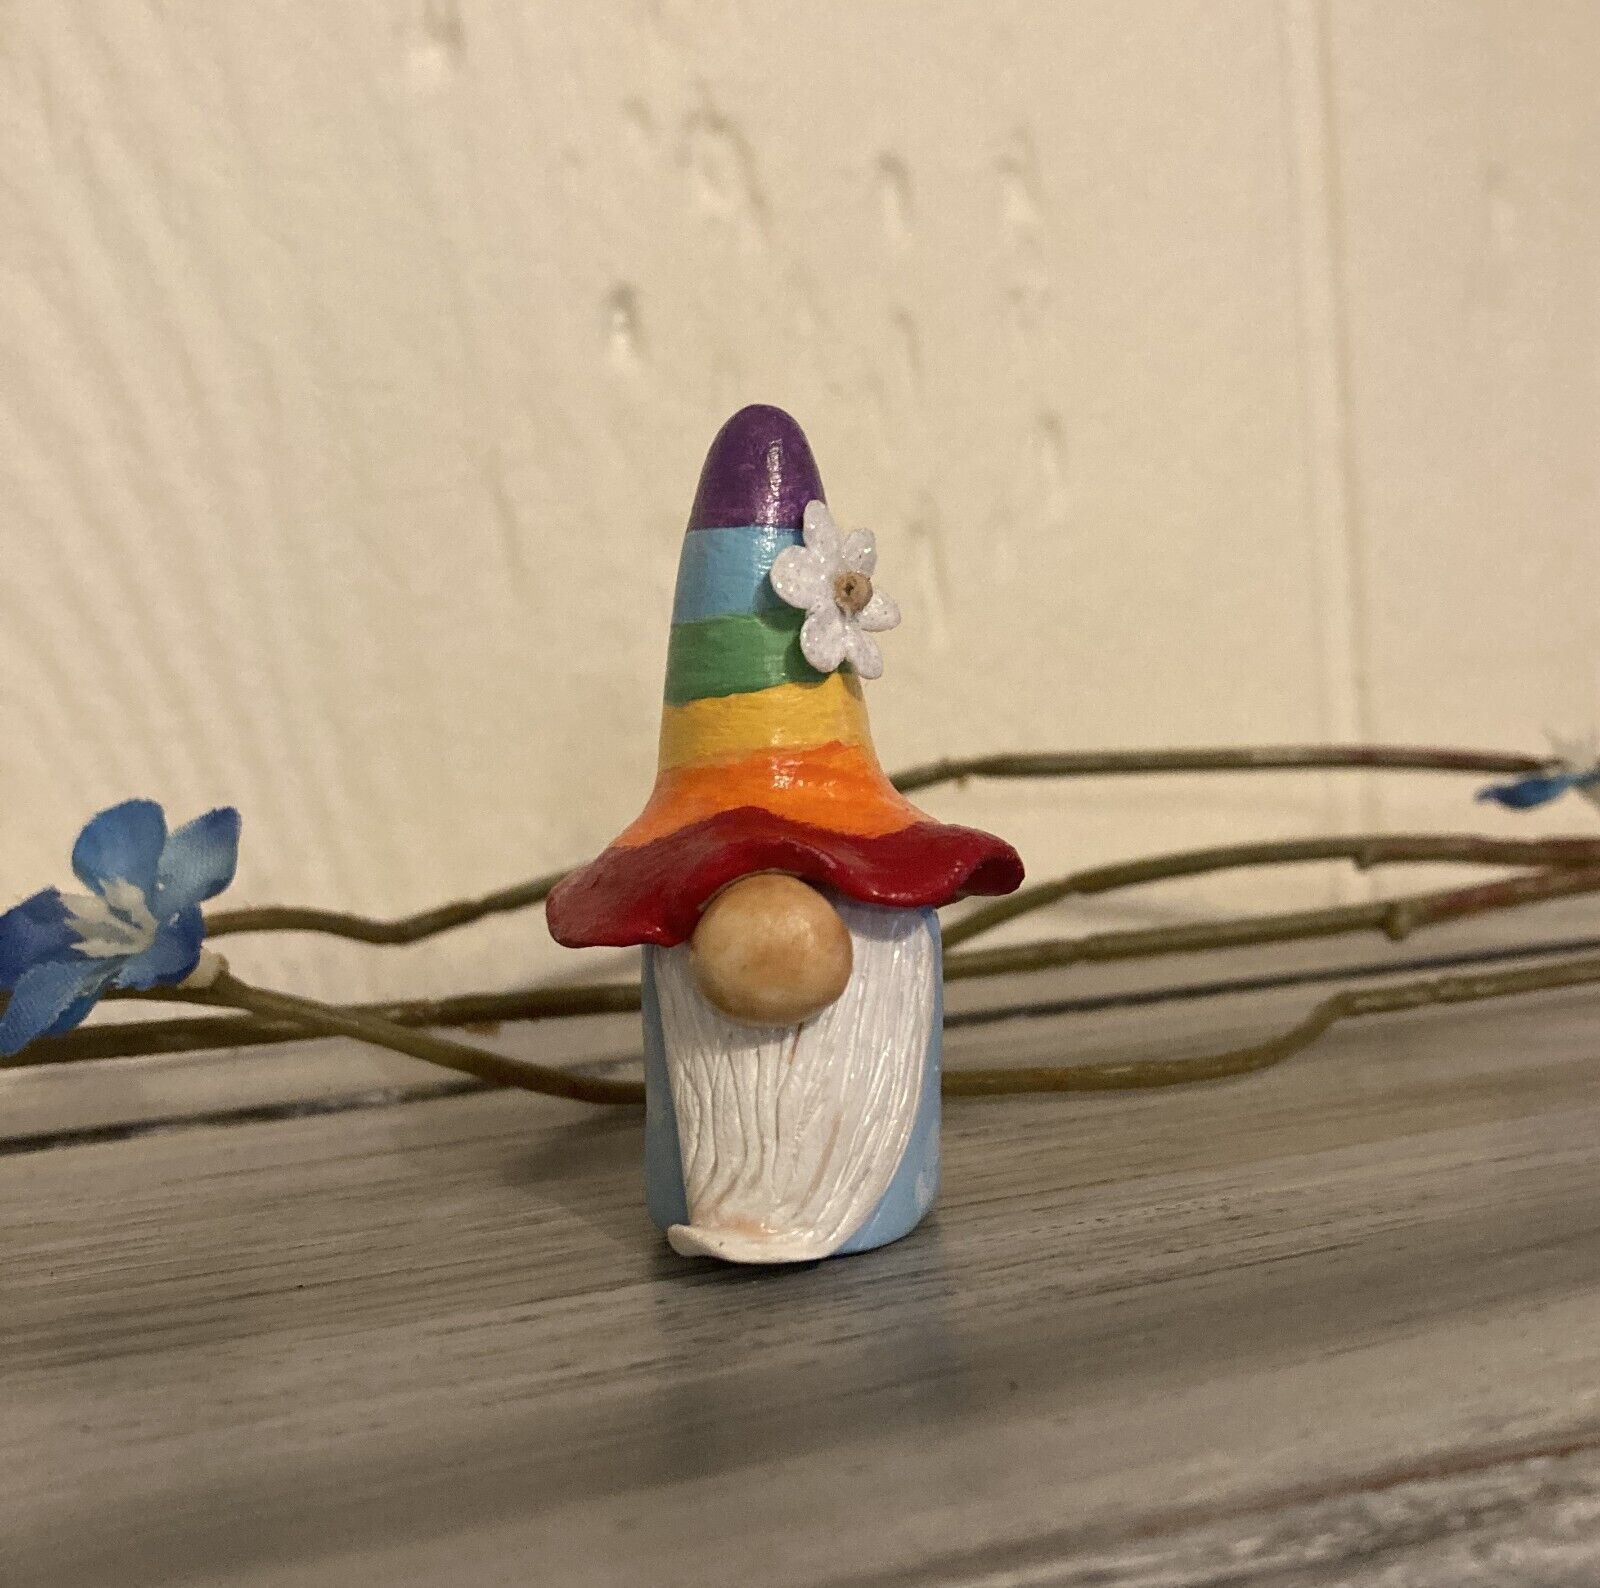 Adopt a rainbow Gnome  - tiny gnome brings sunshine to your home - handmade